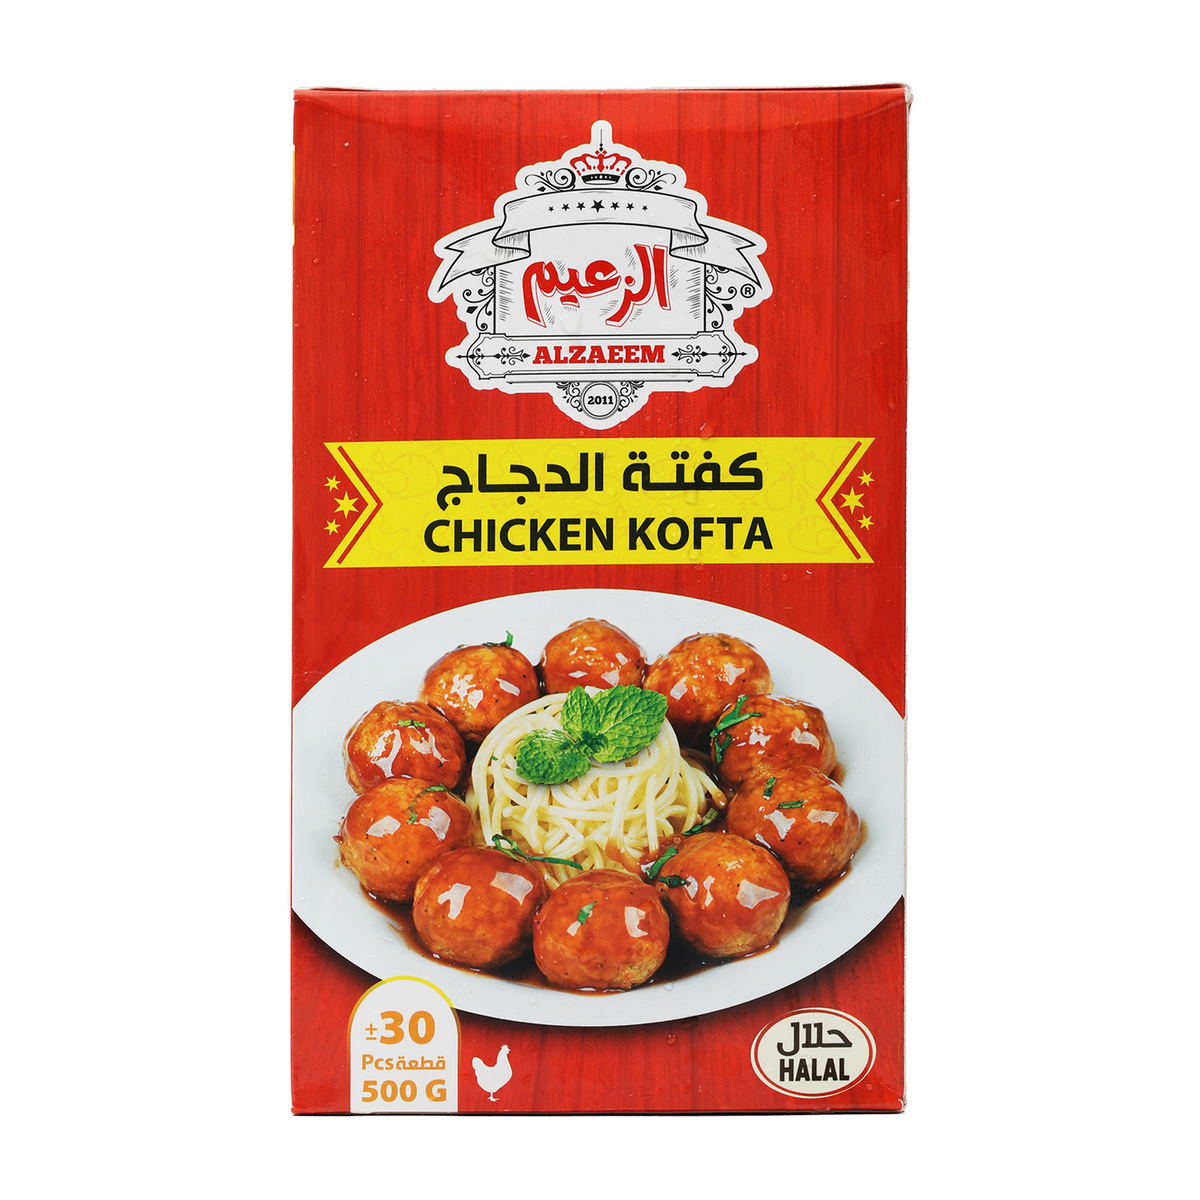 Al Zaeem Chicken Kofta 2 x 500g